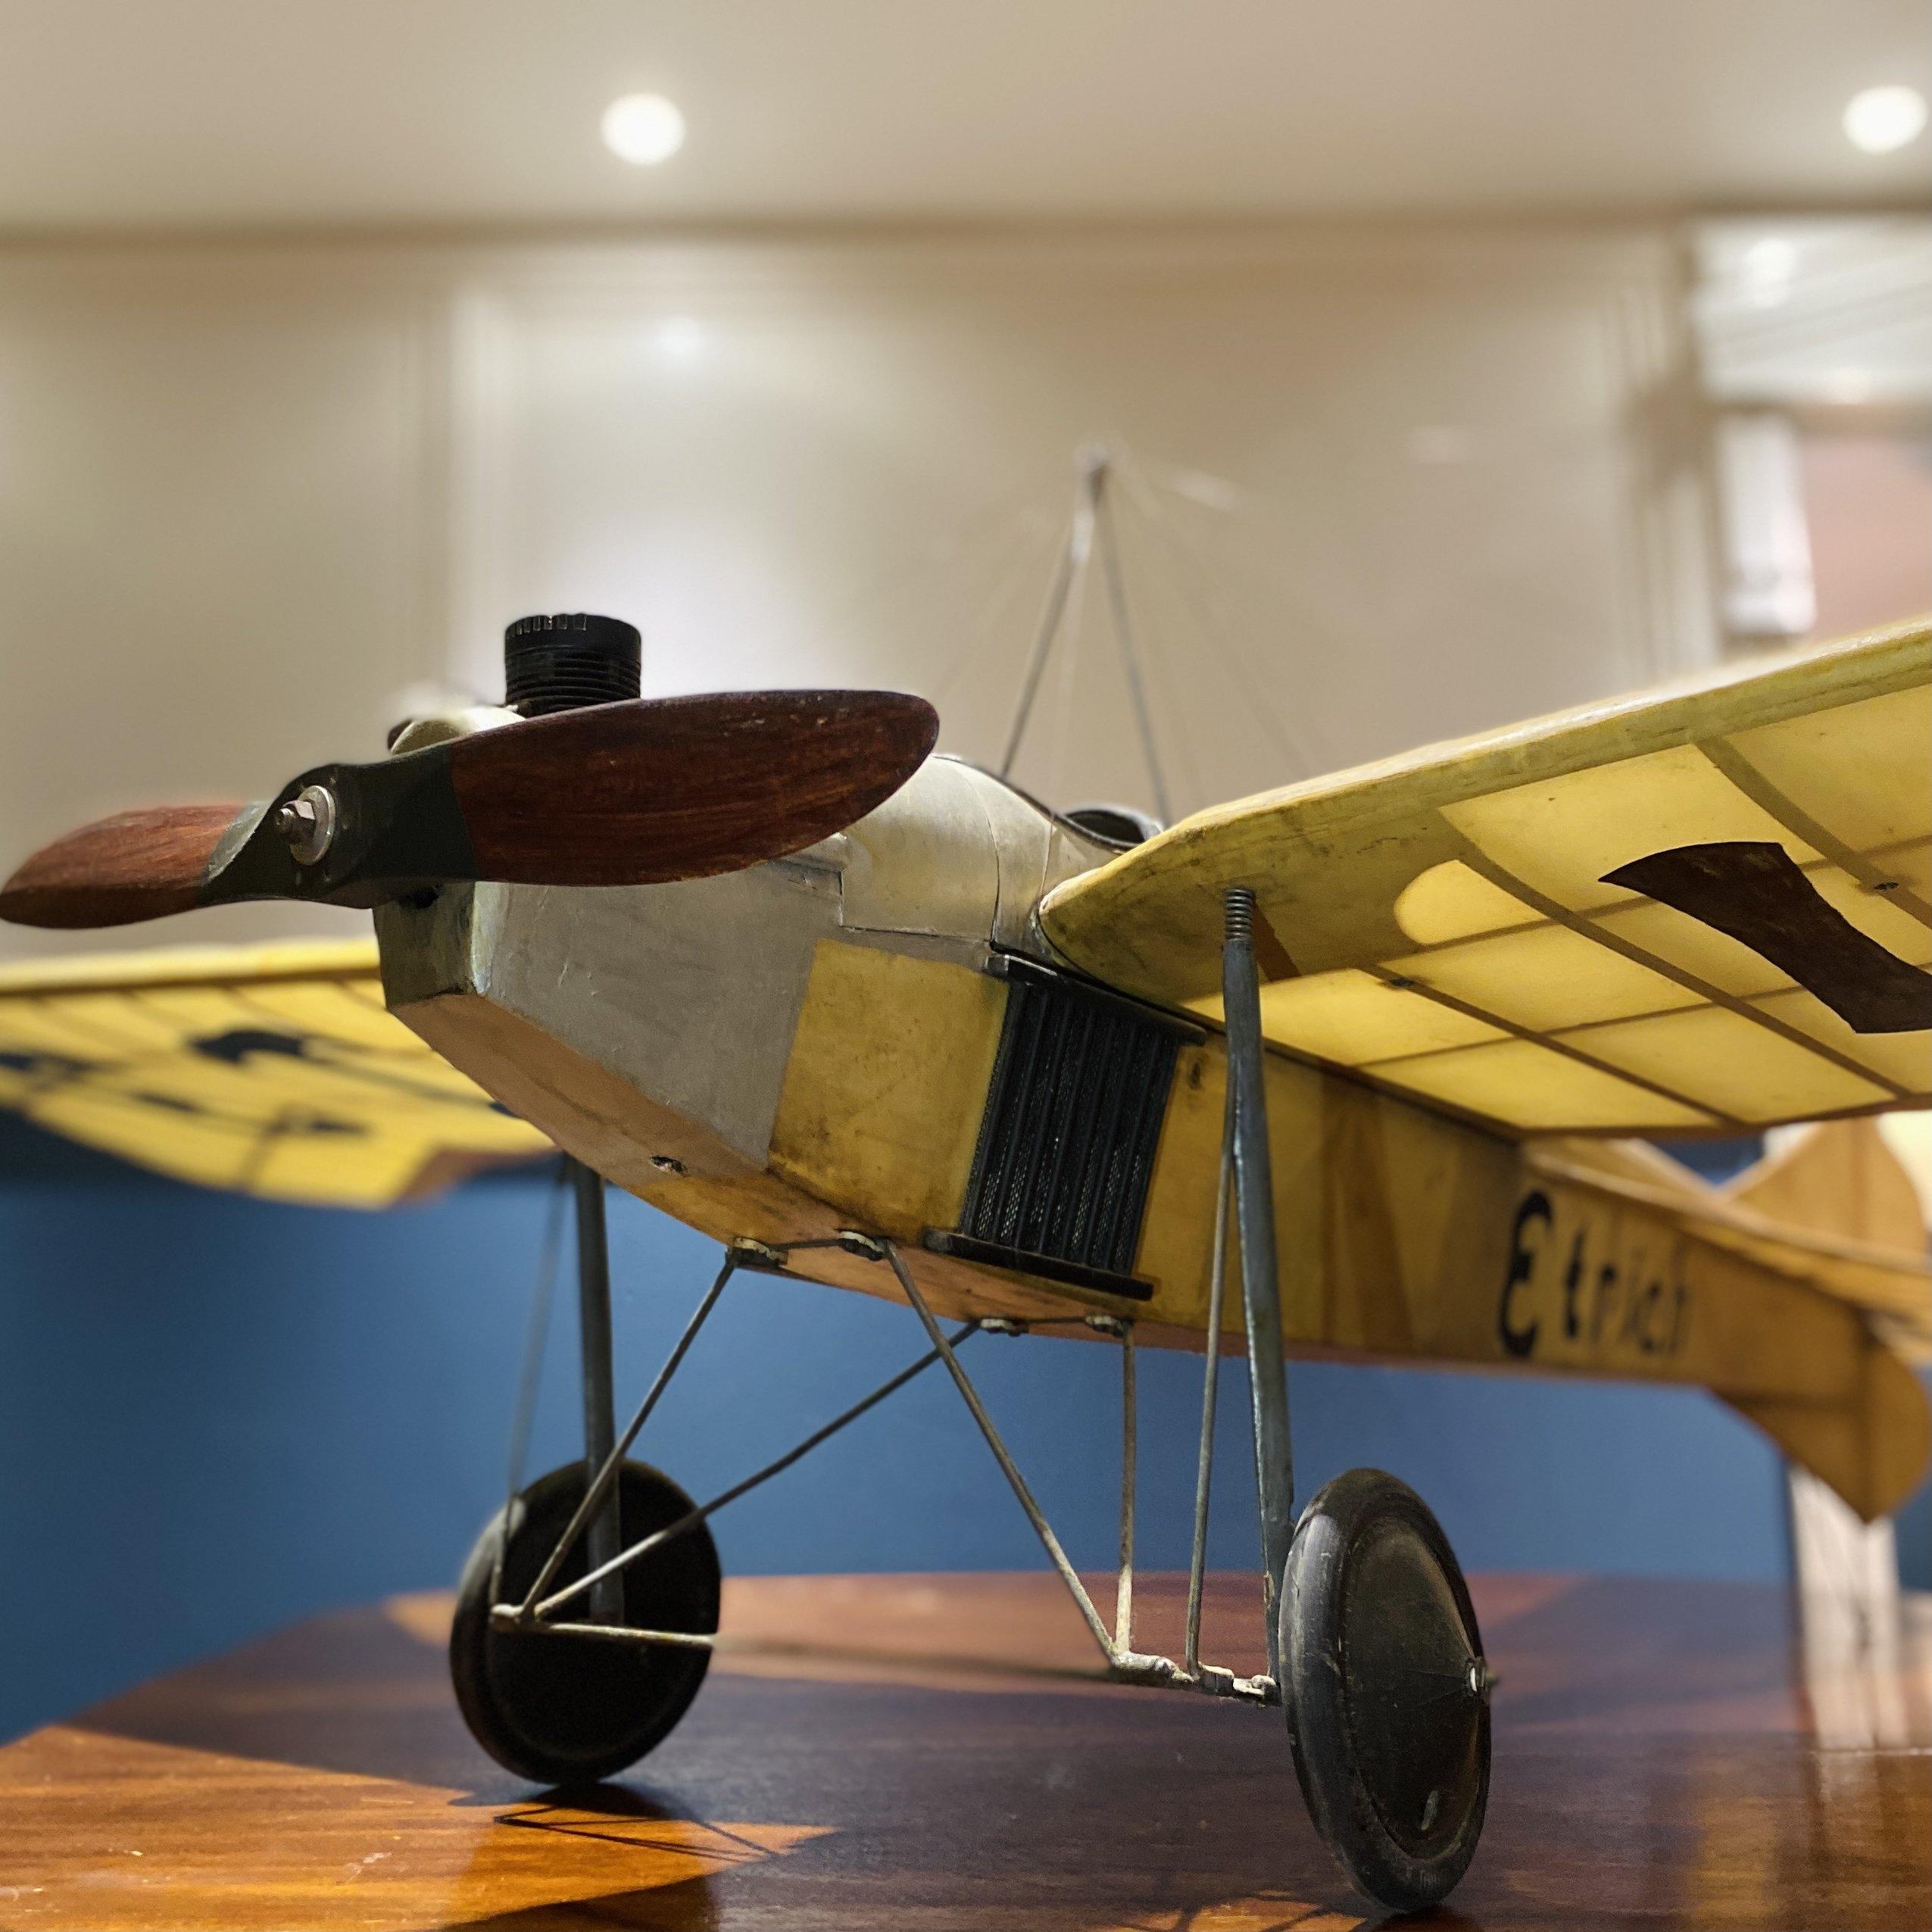 Etrich Taube Model Aircraft